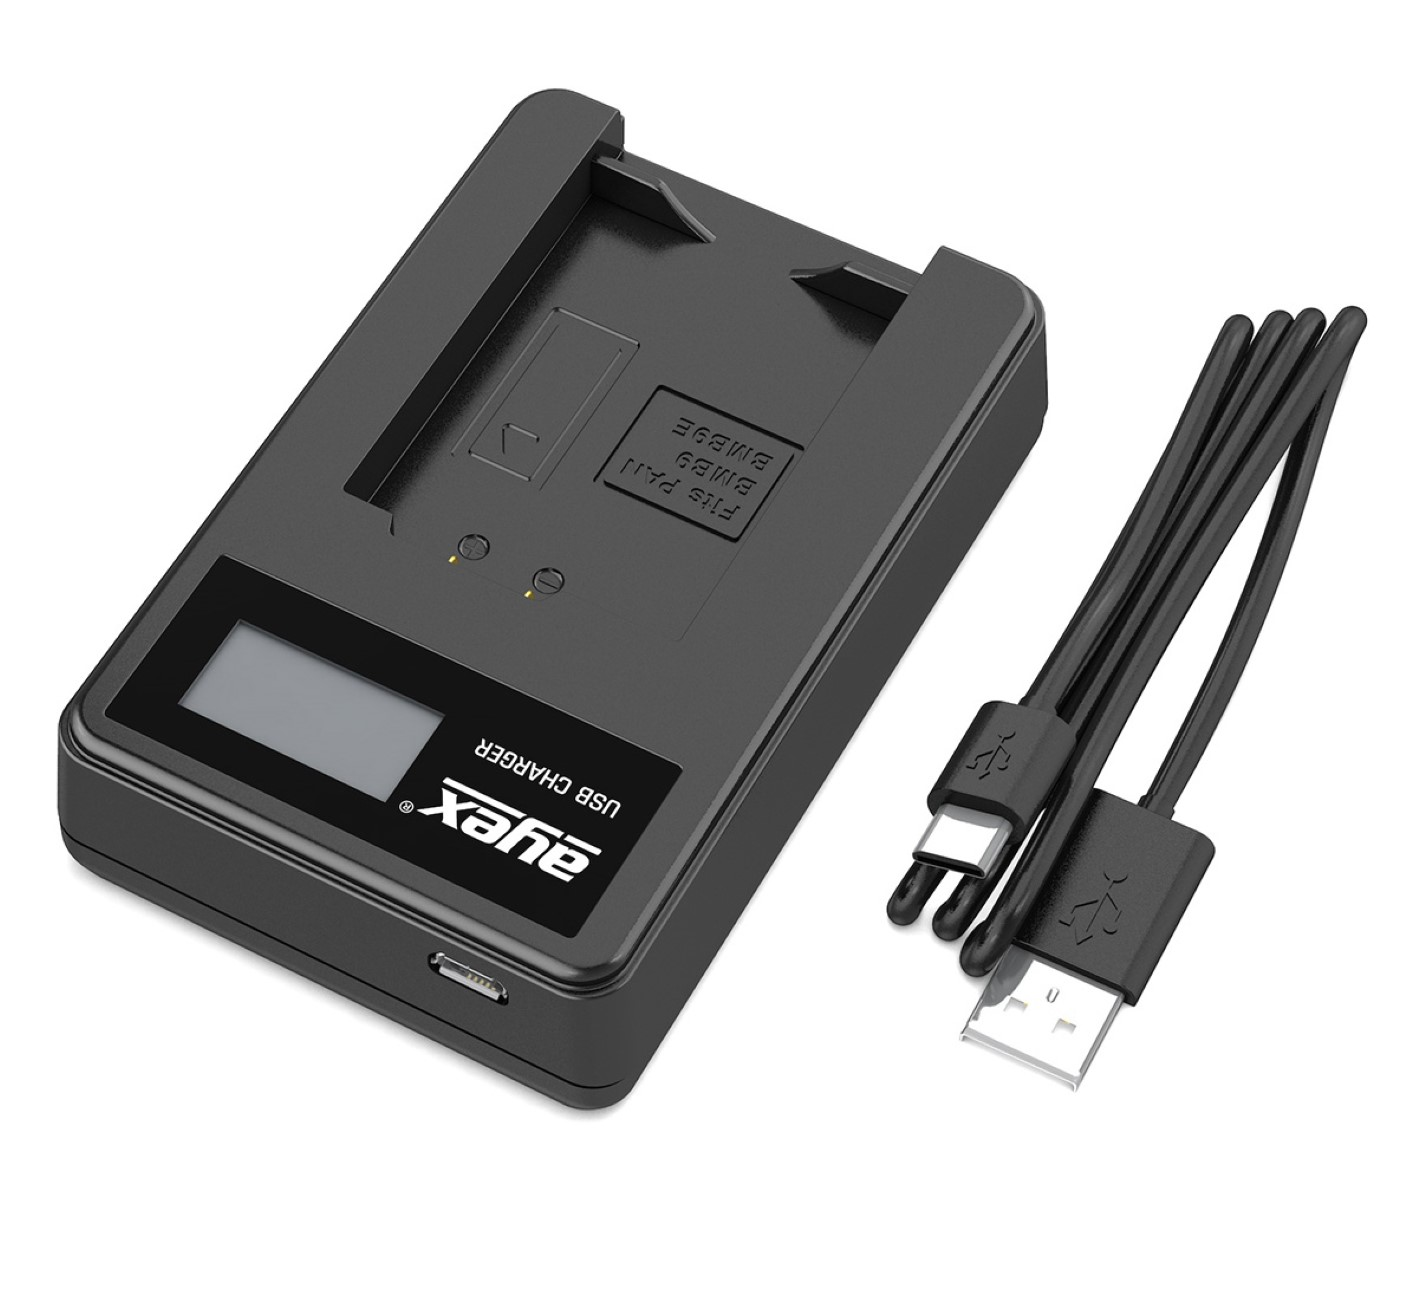 AYEX USB Black Lader, Panasonic DMW-BMB9 Ladegerät Akku, Kamera-Akku DMW-BMB9E für